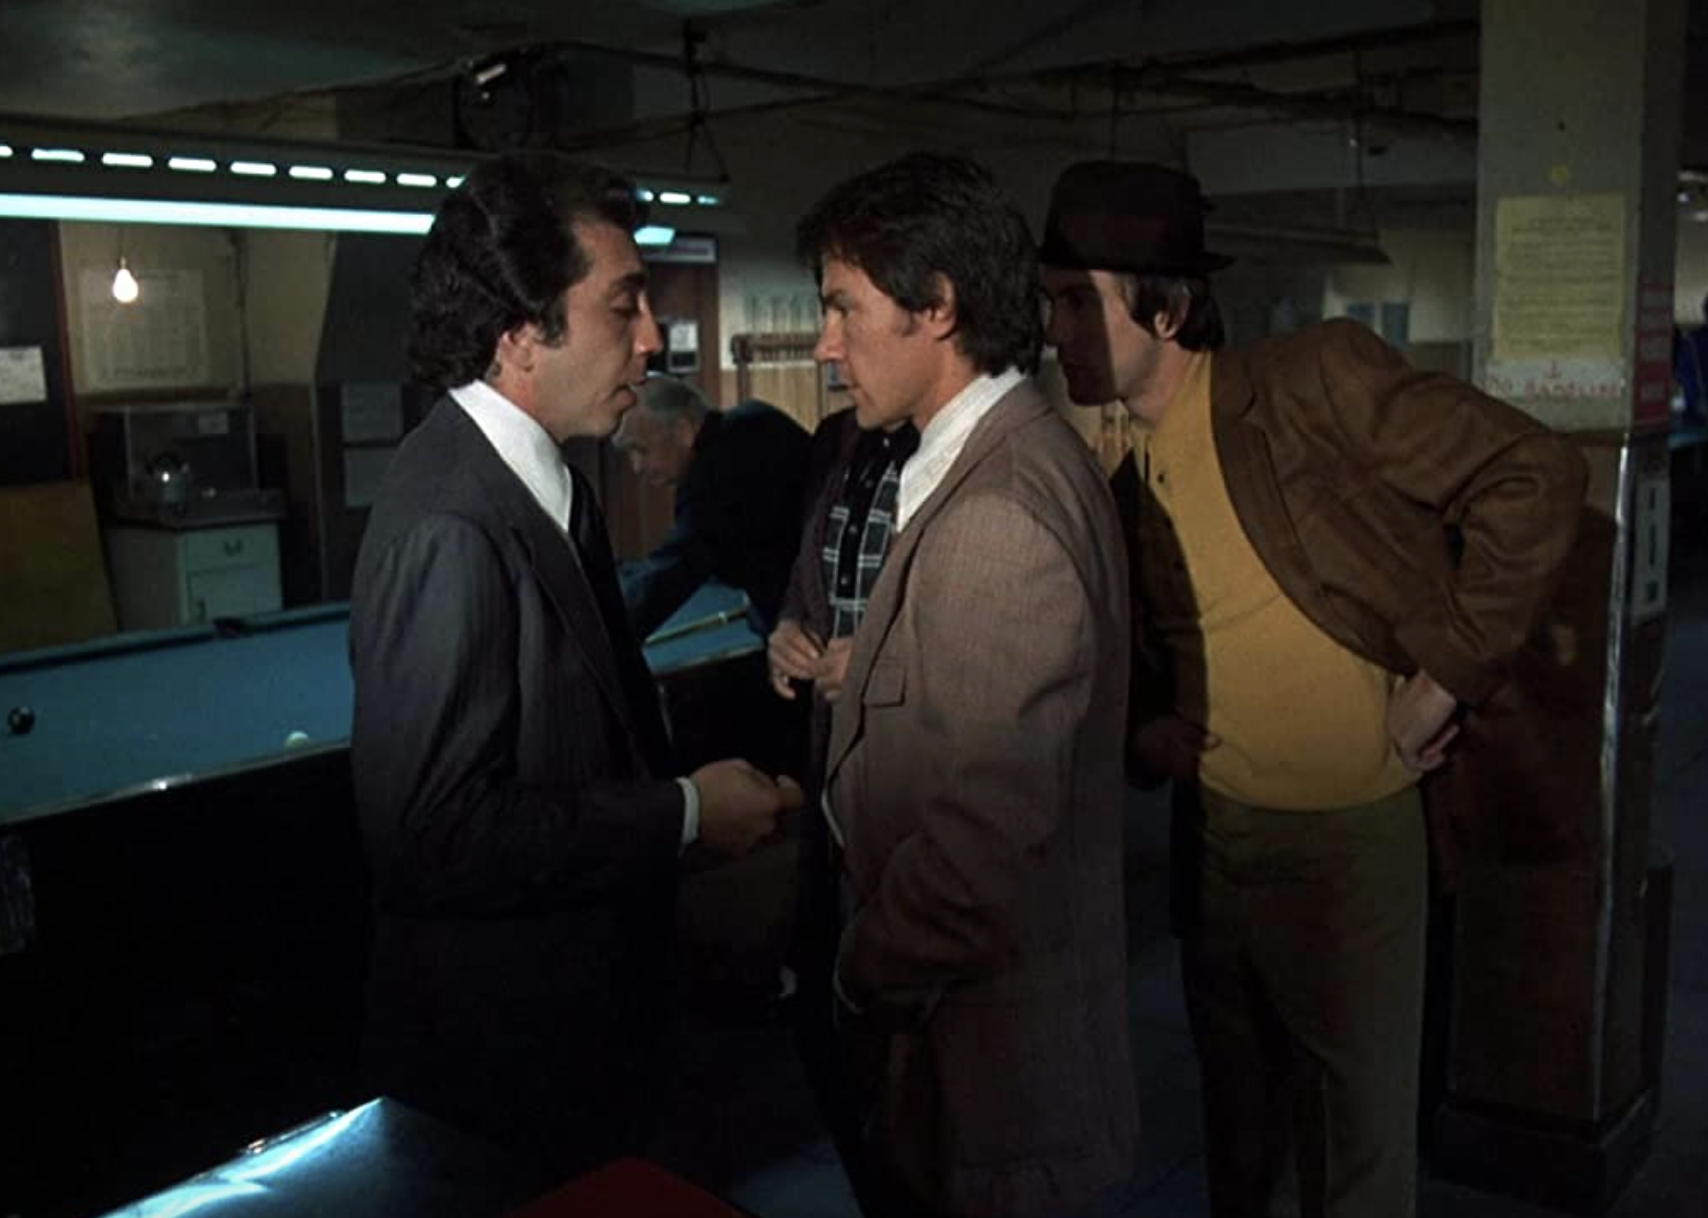 Robert De Niro, Harvey Keitel, and Lenny Scaletta in "Mean Streets".